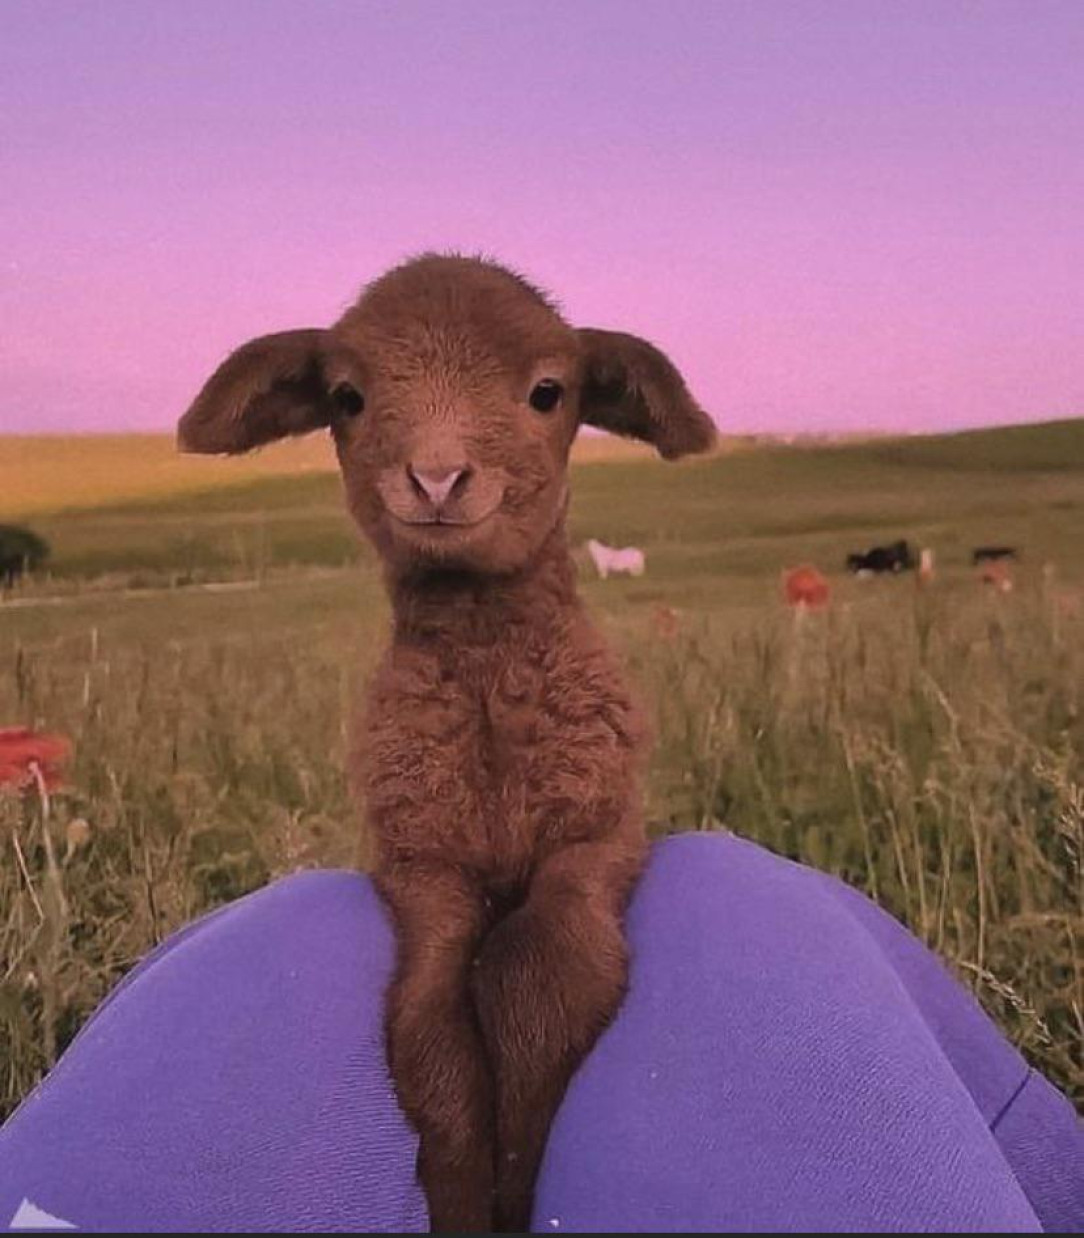 Just a happy little lamb